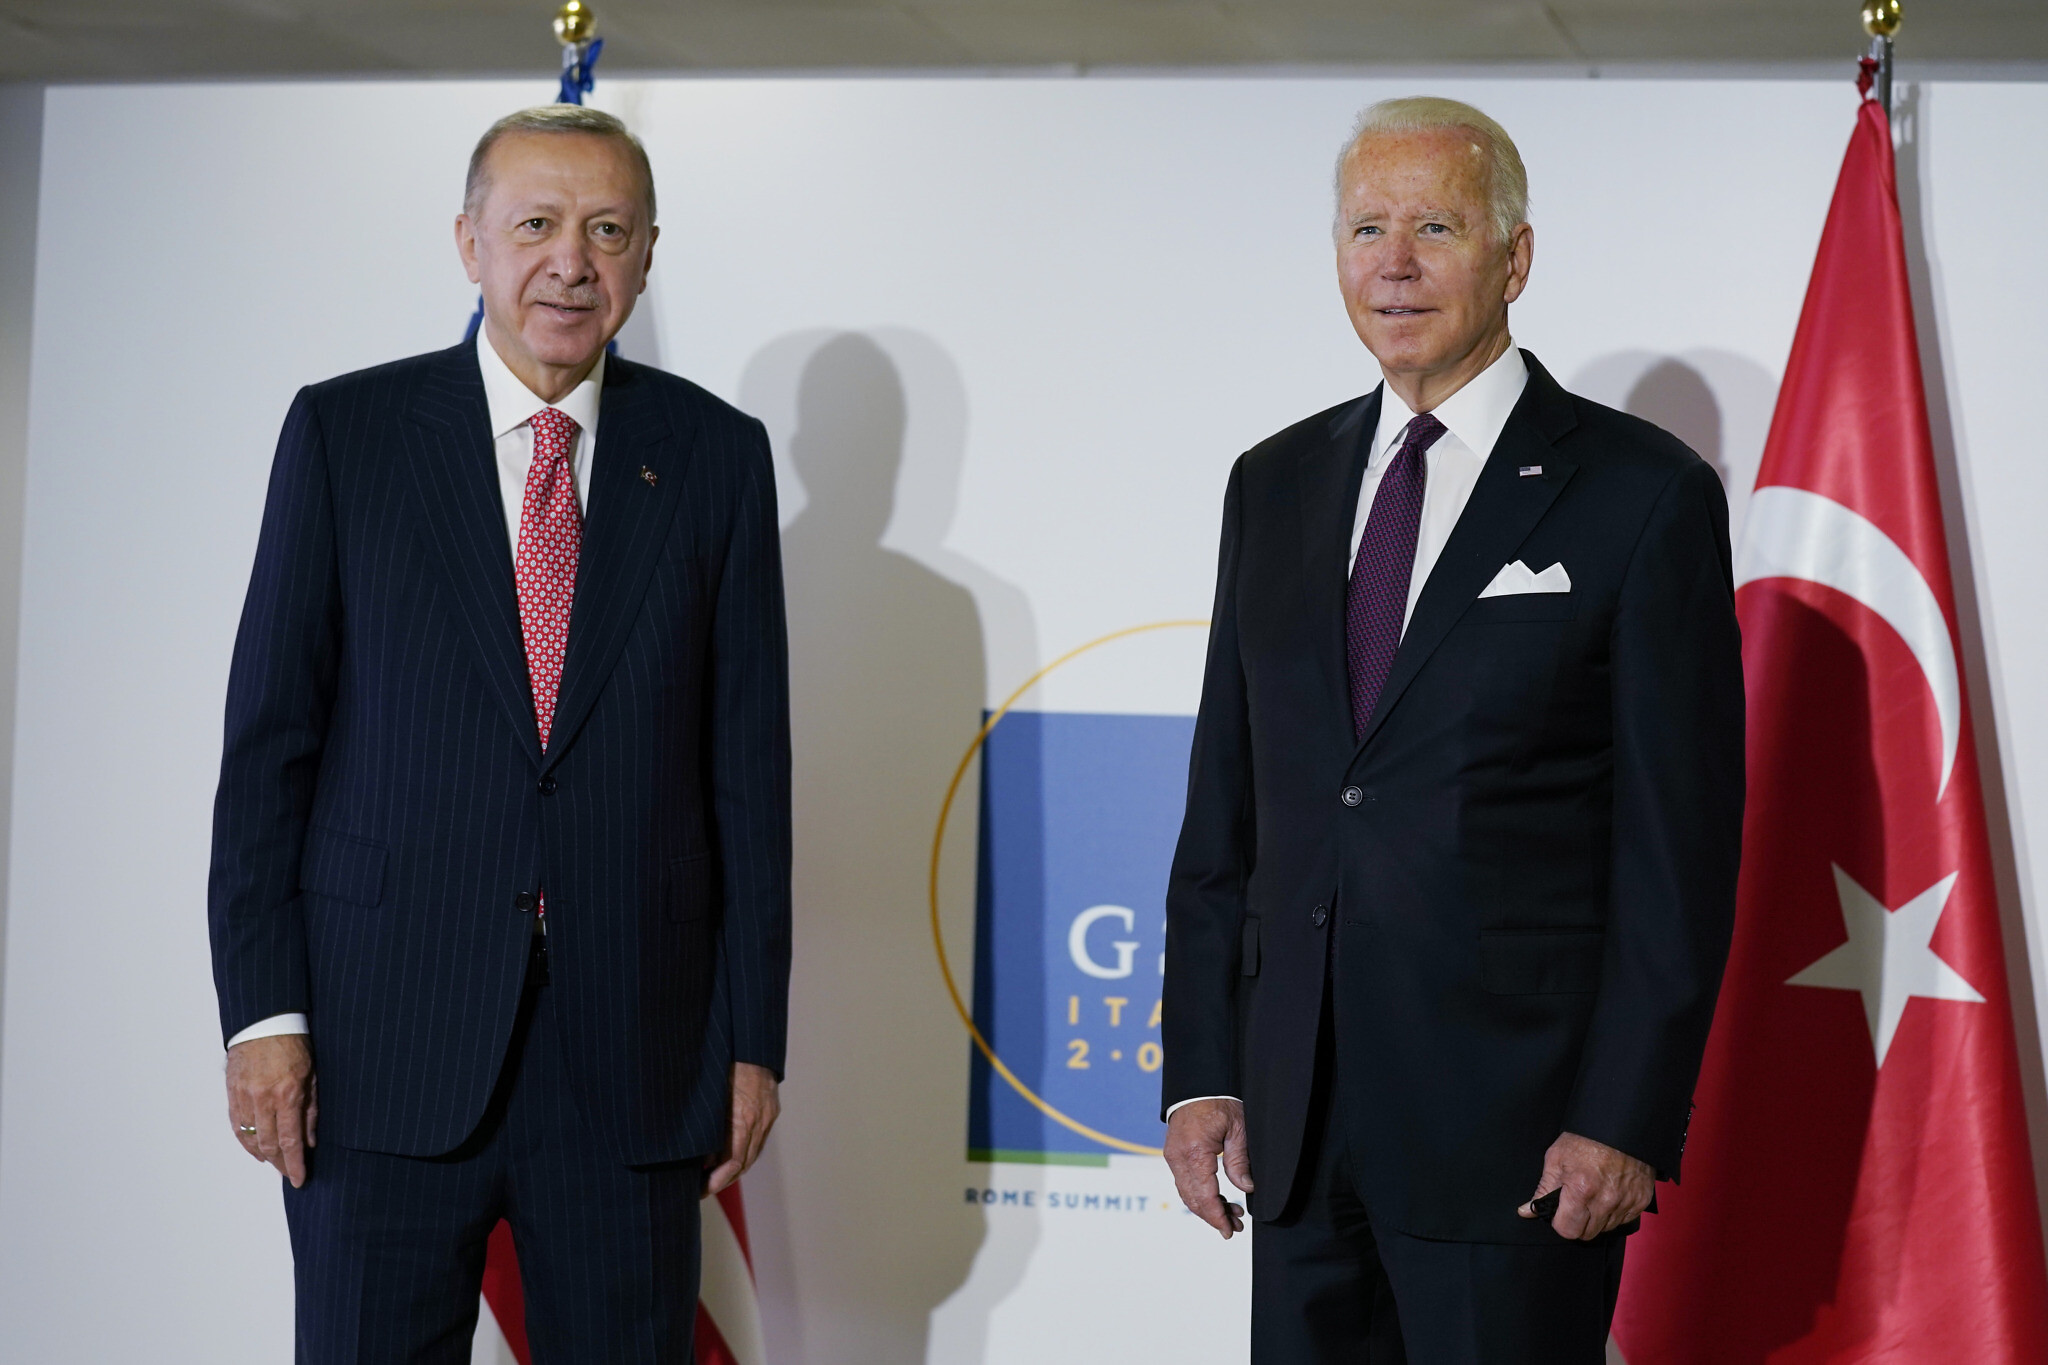 Erdogan postpones White House meeting with Biden due to scheduling (Credits: AP Photo)